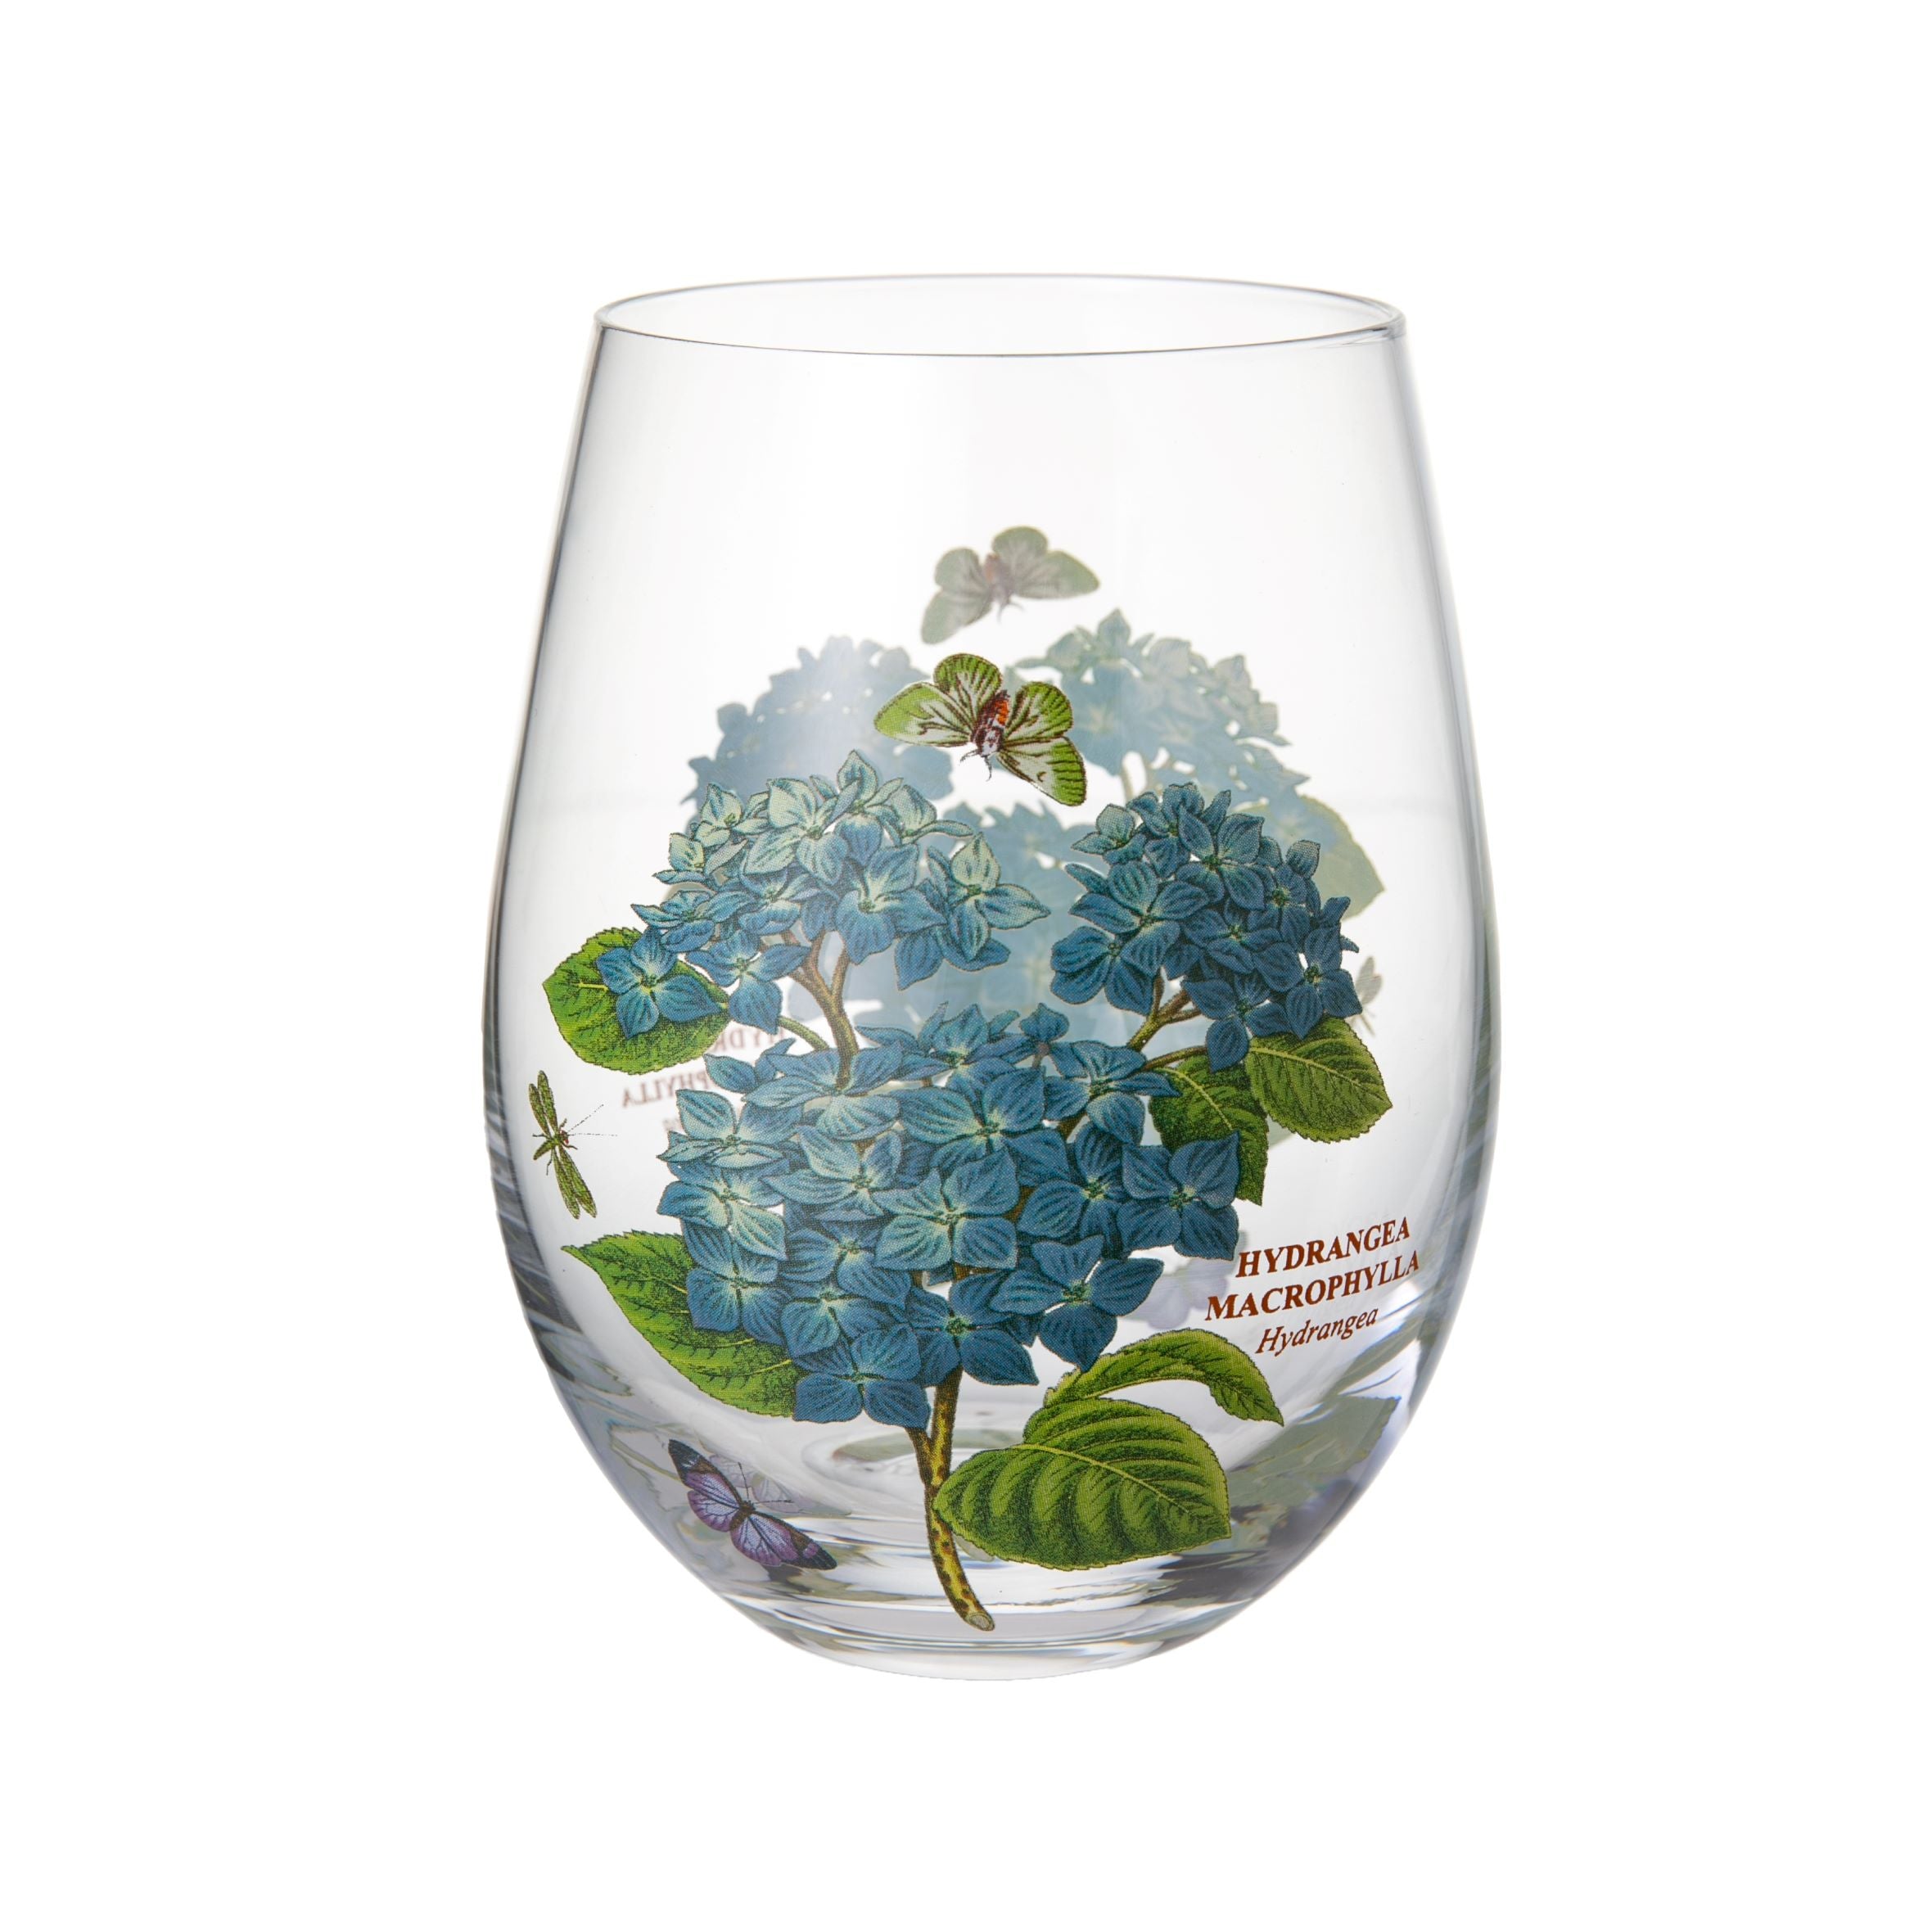 Floral Wine Glasses, Floral Stemless Wine Glasses